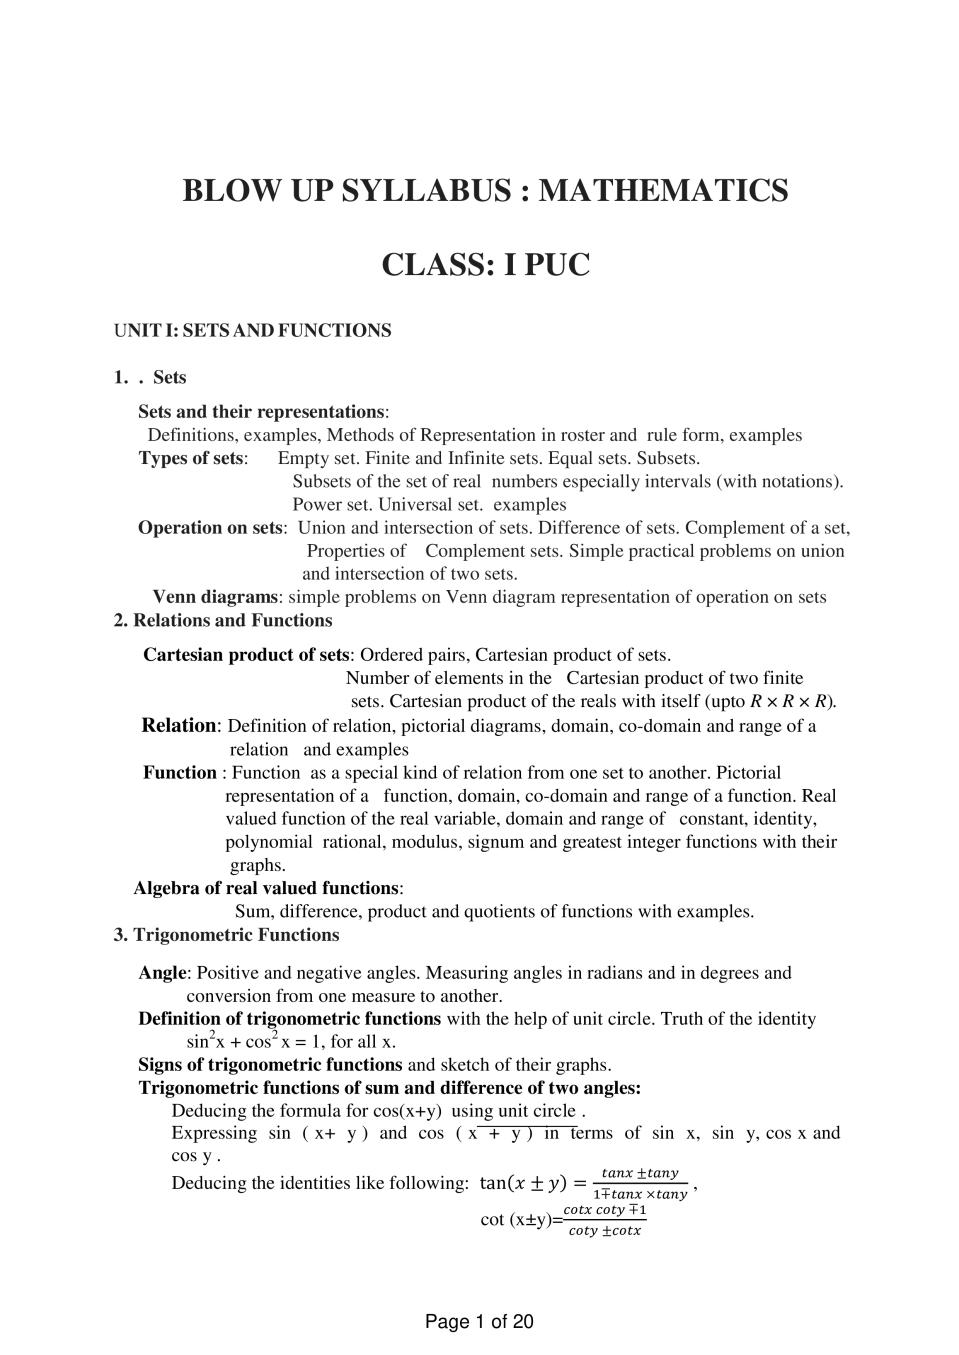 1st PUC Syllabus for Mathematics - Page 1